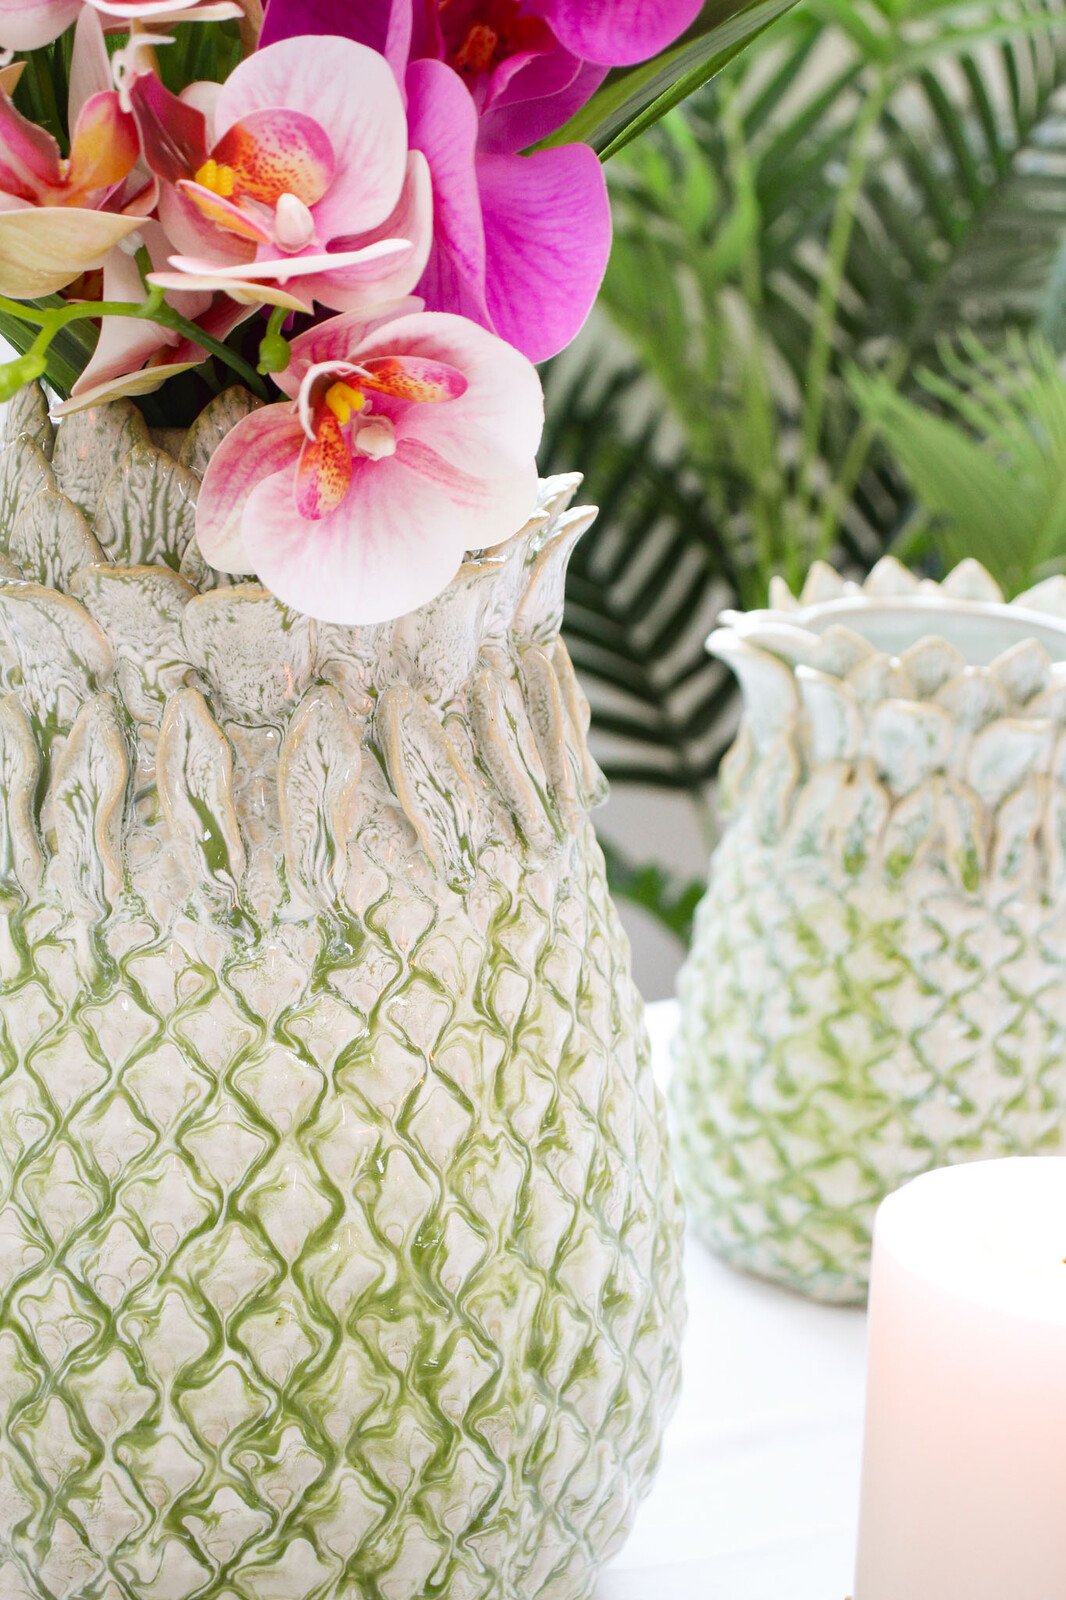 Pineapple Vase 